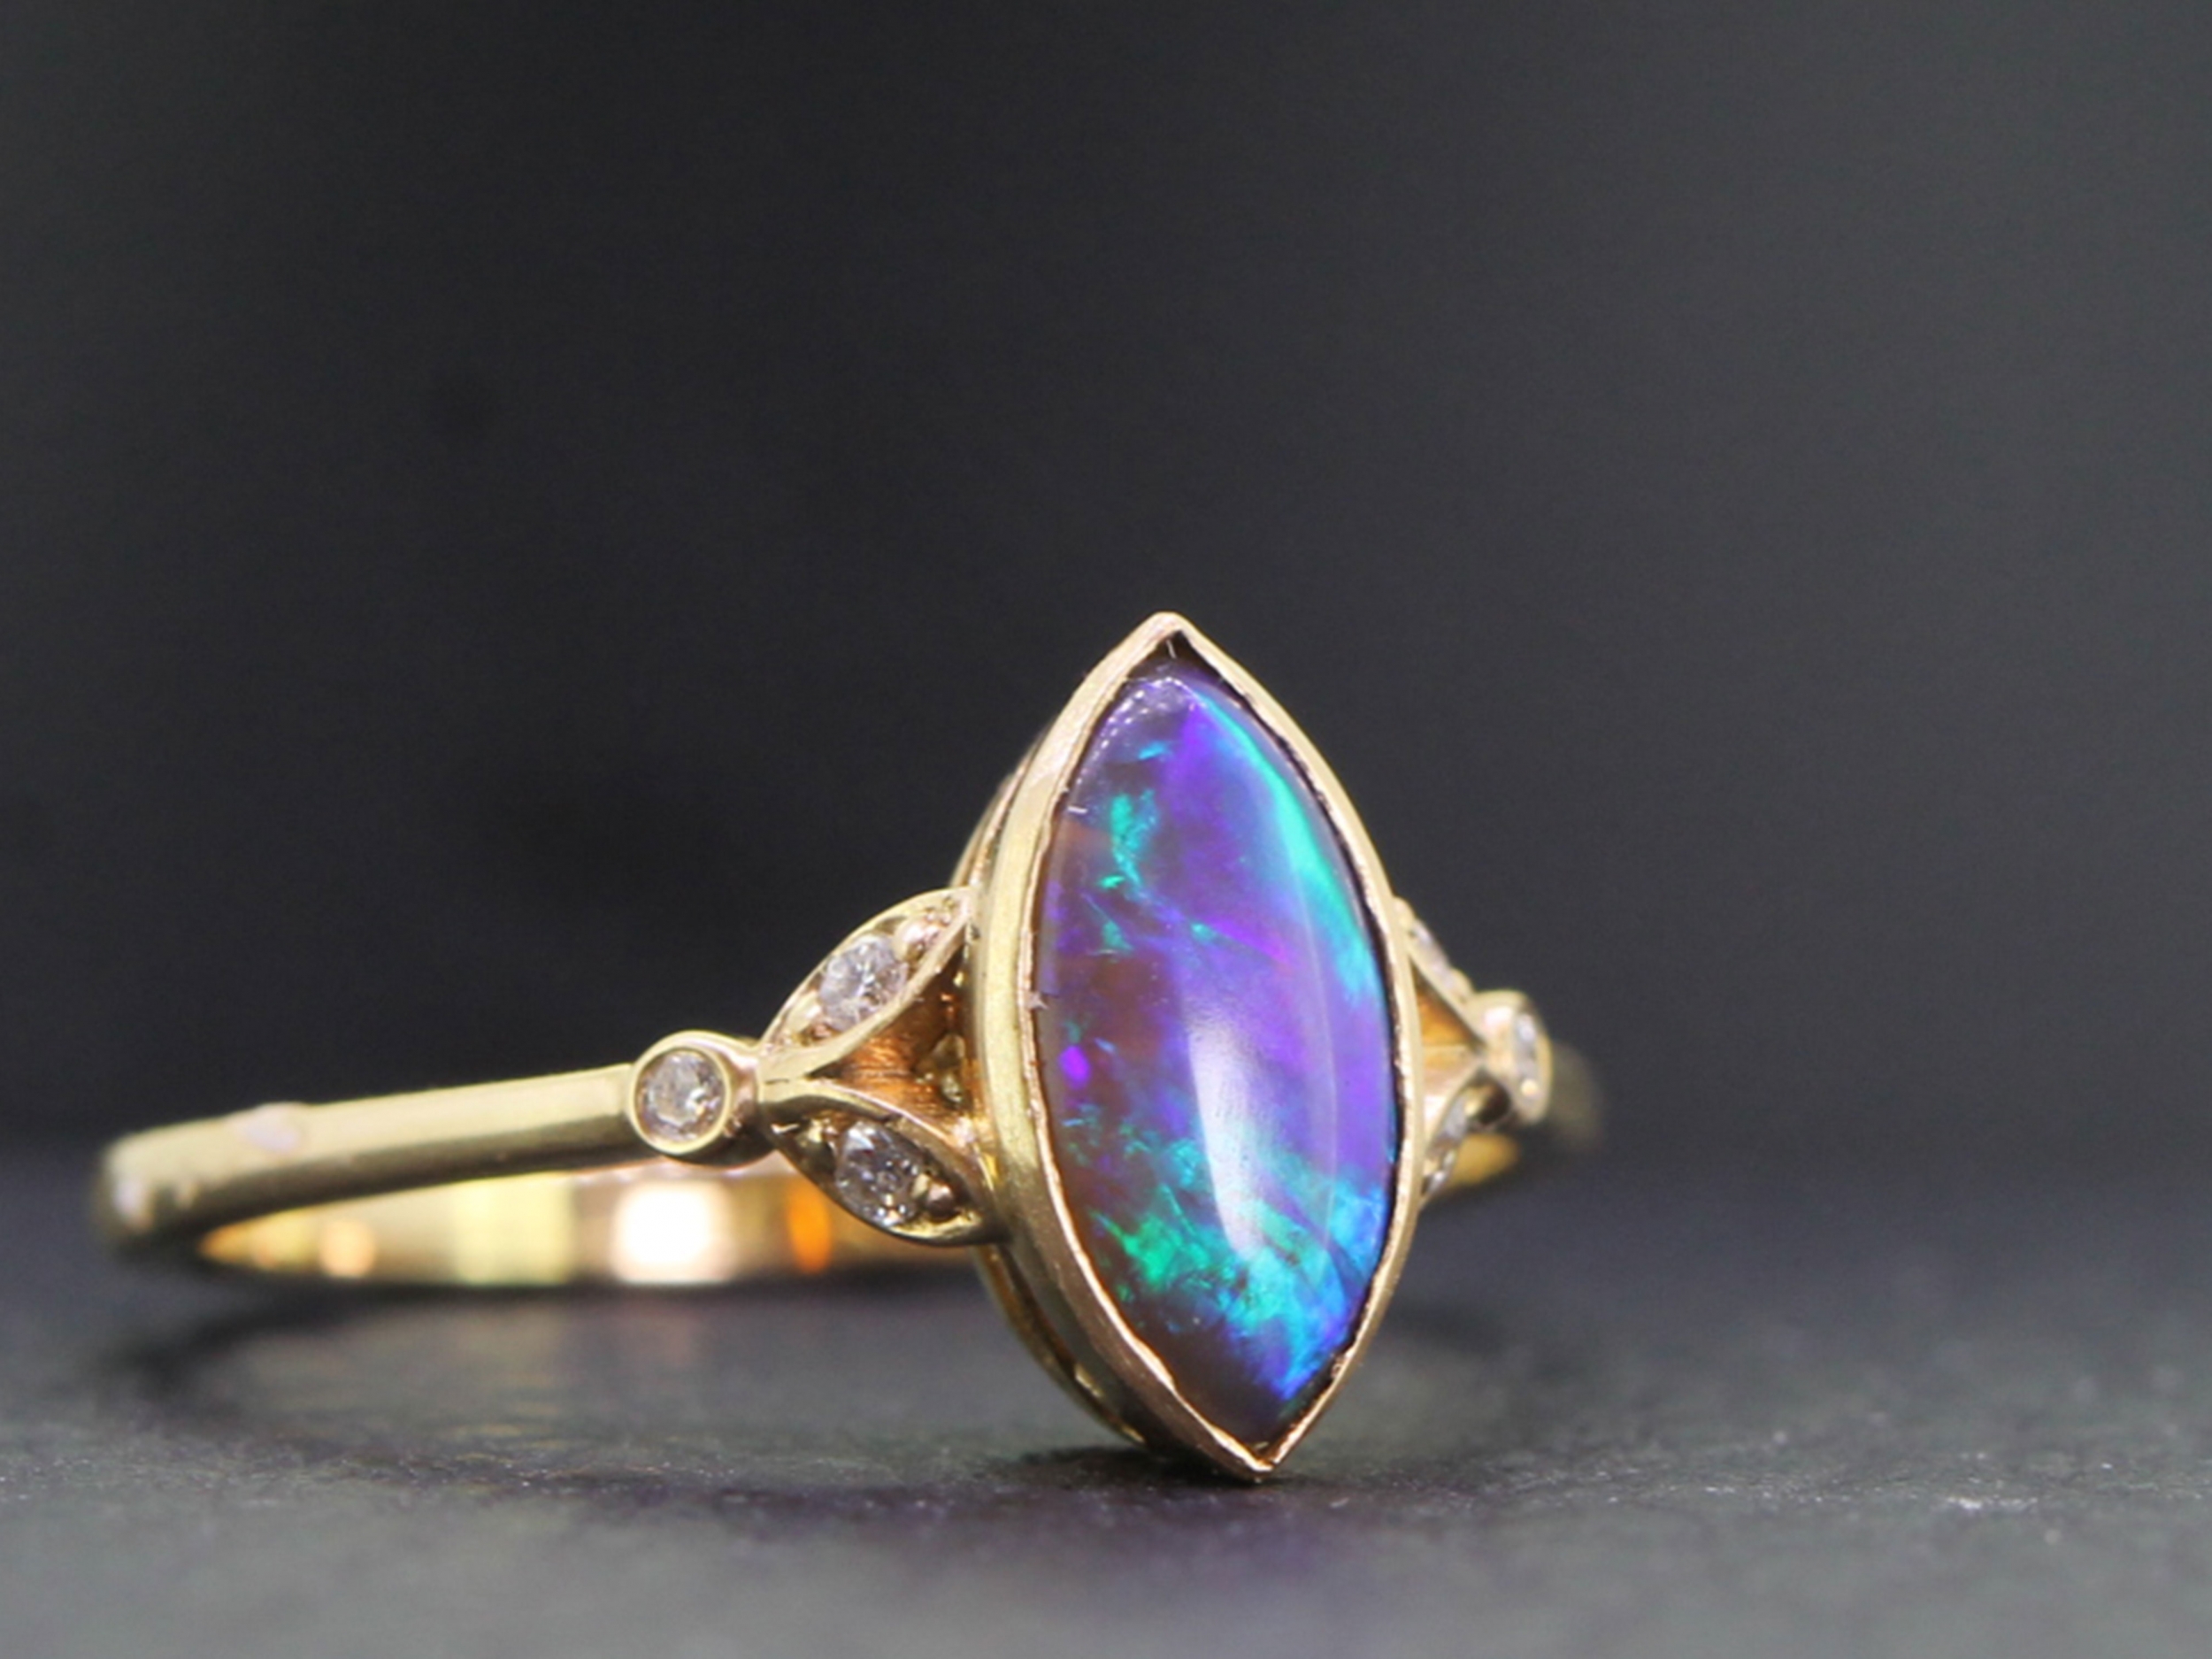 Crystal Opal and Diamond Ring 5189 | Australian Opal Jewelry